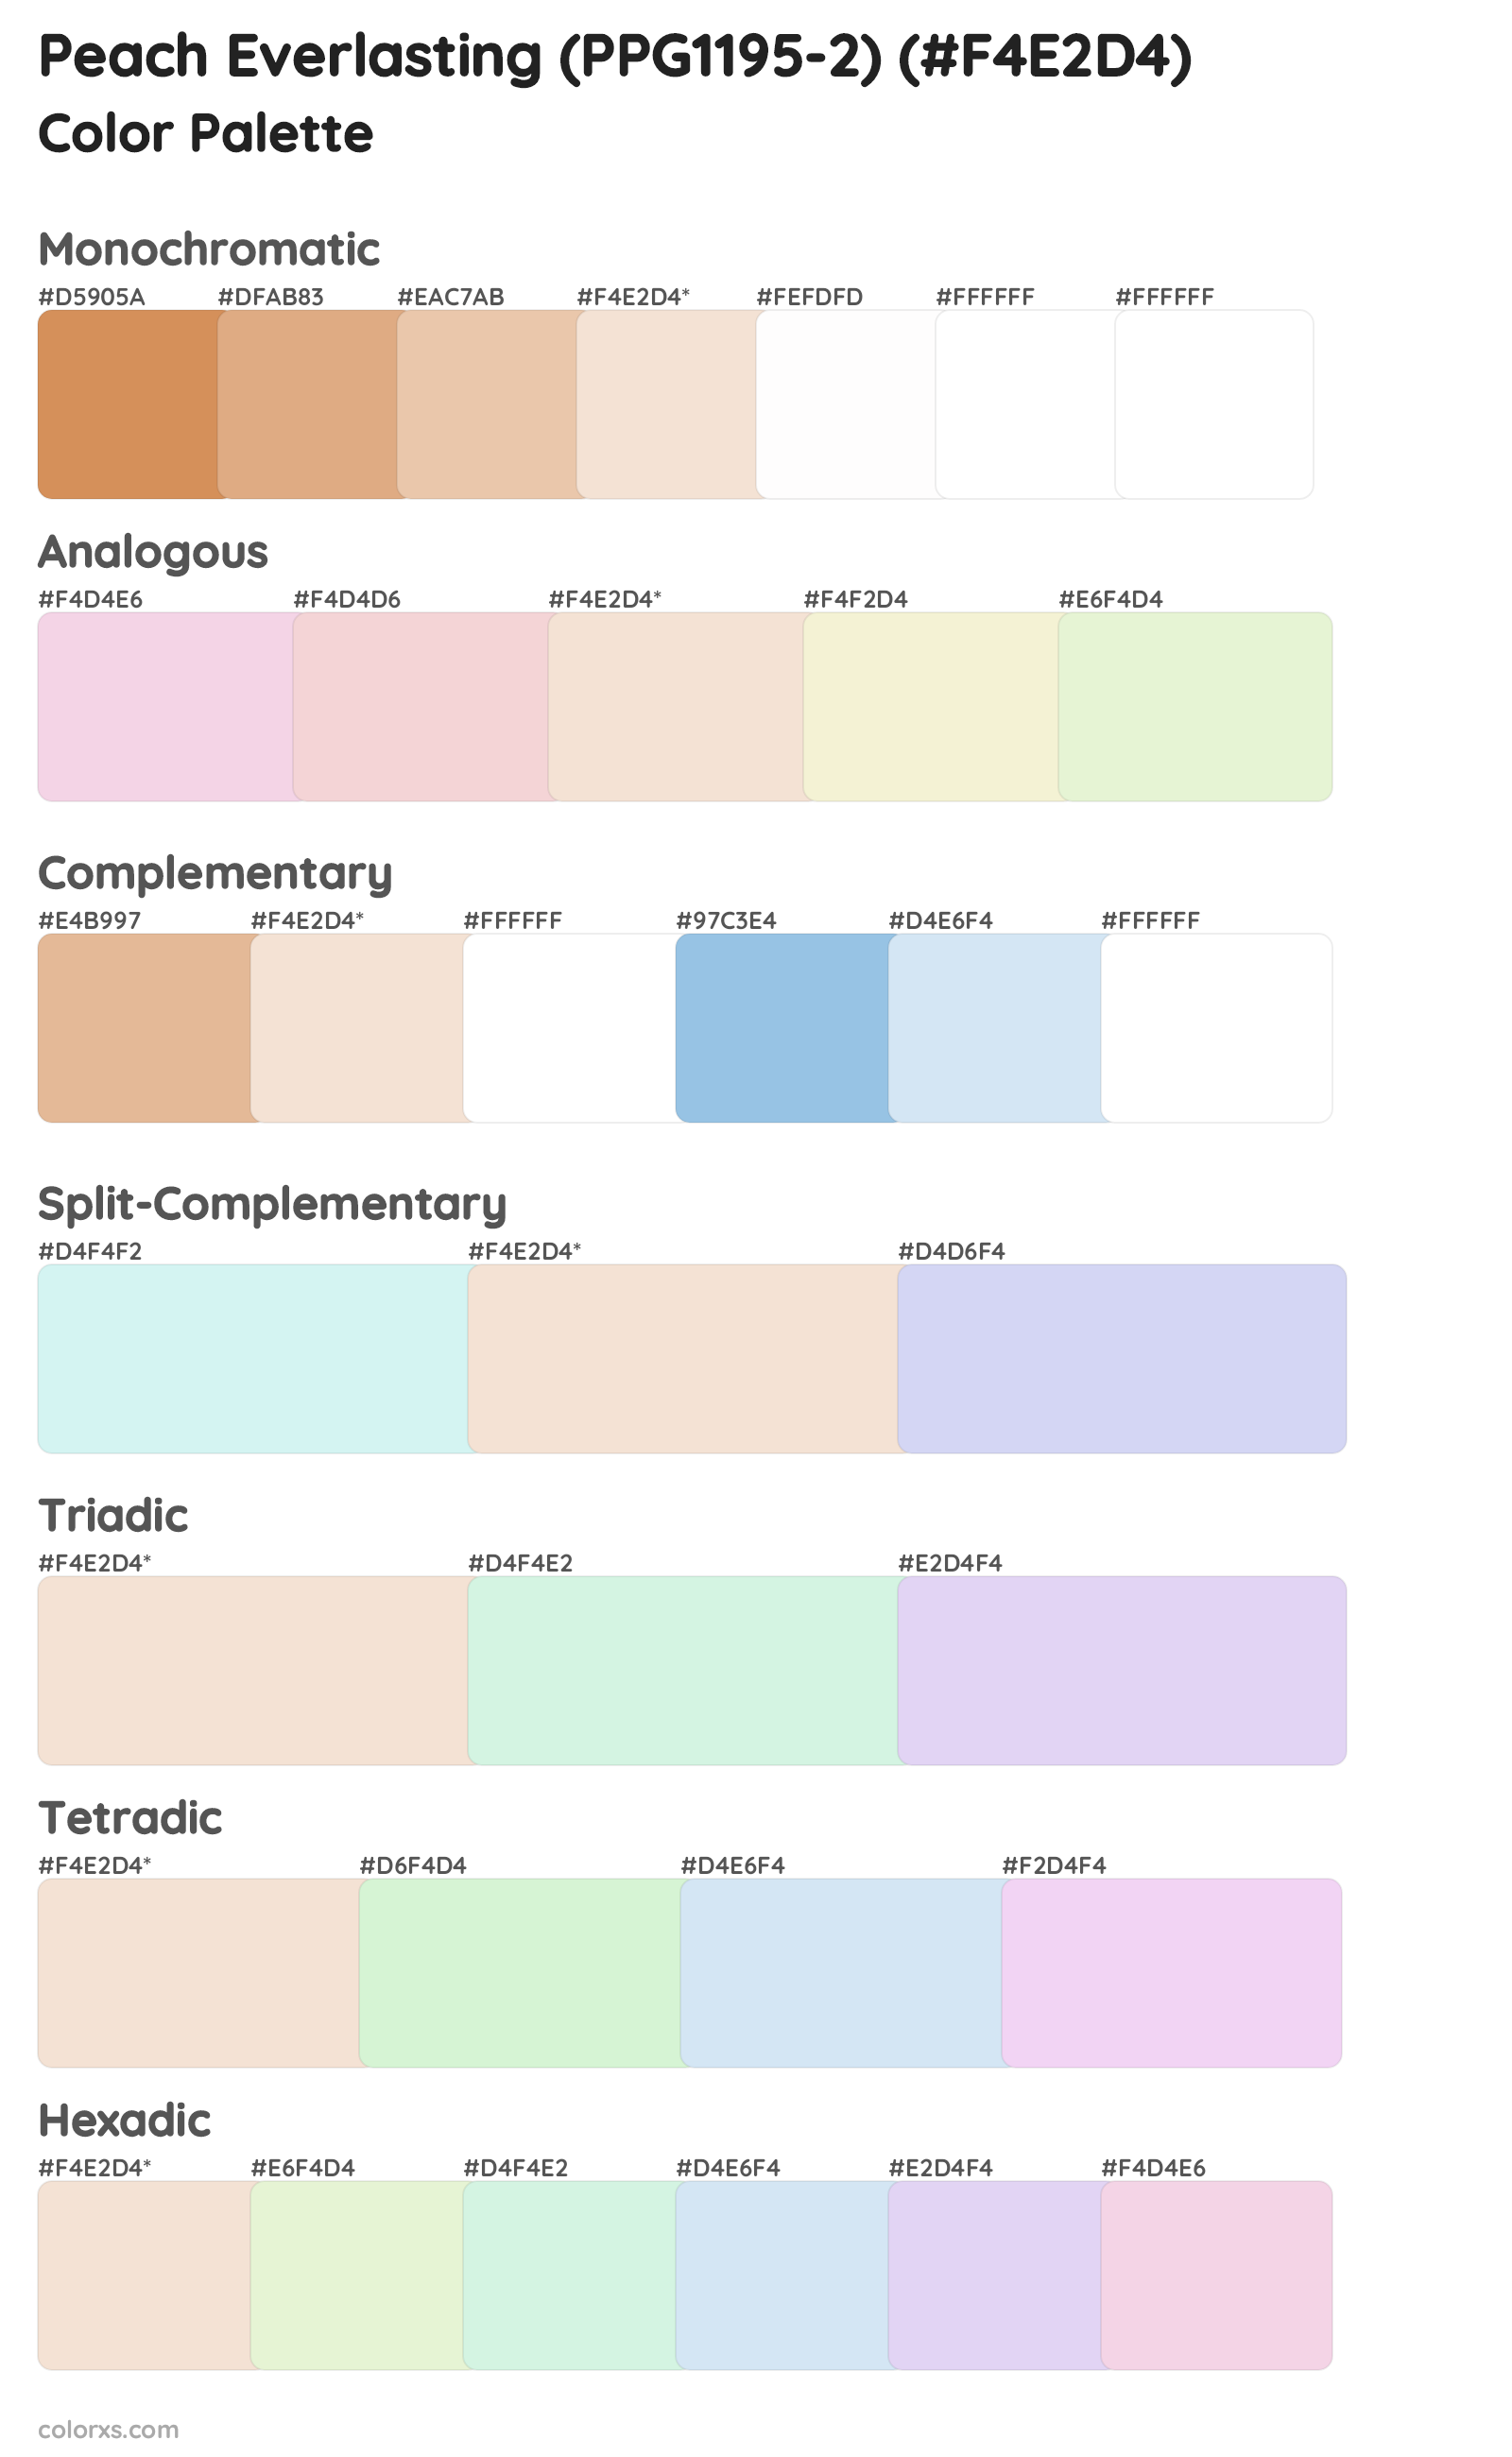 Peach Everlasting (PPG1195-2) Color Scheme Palettes